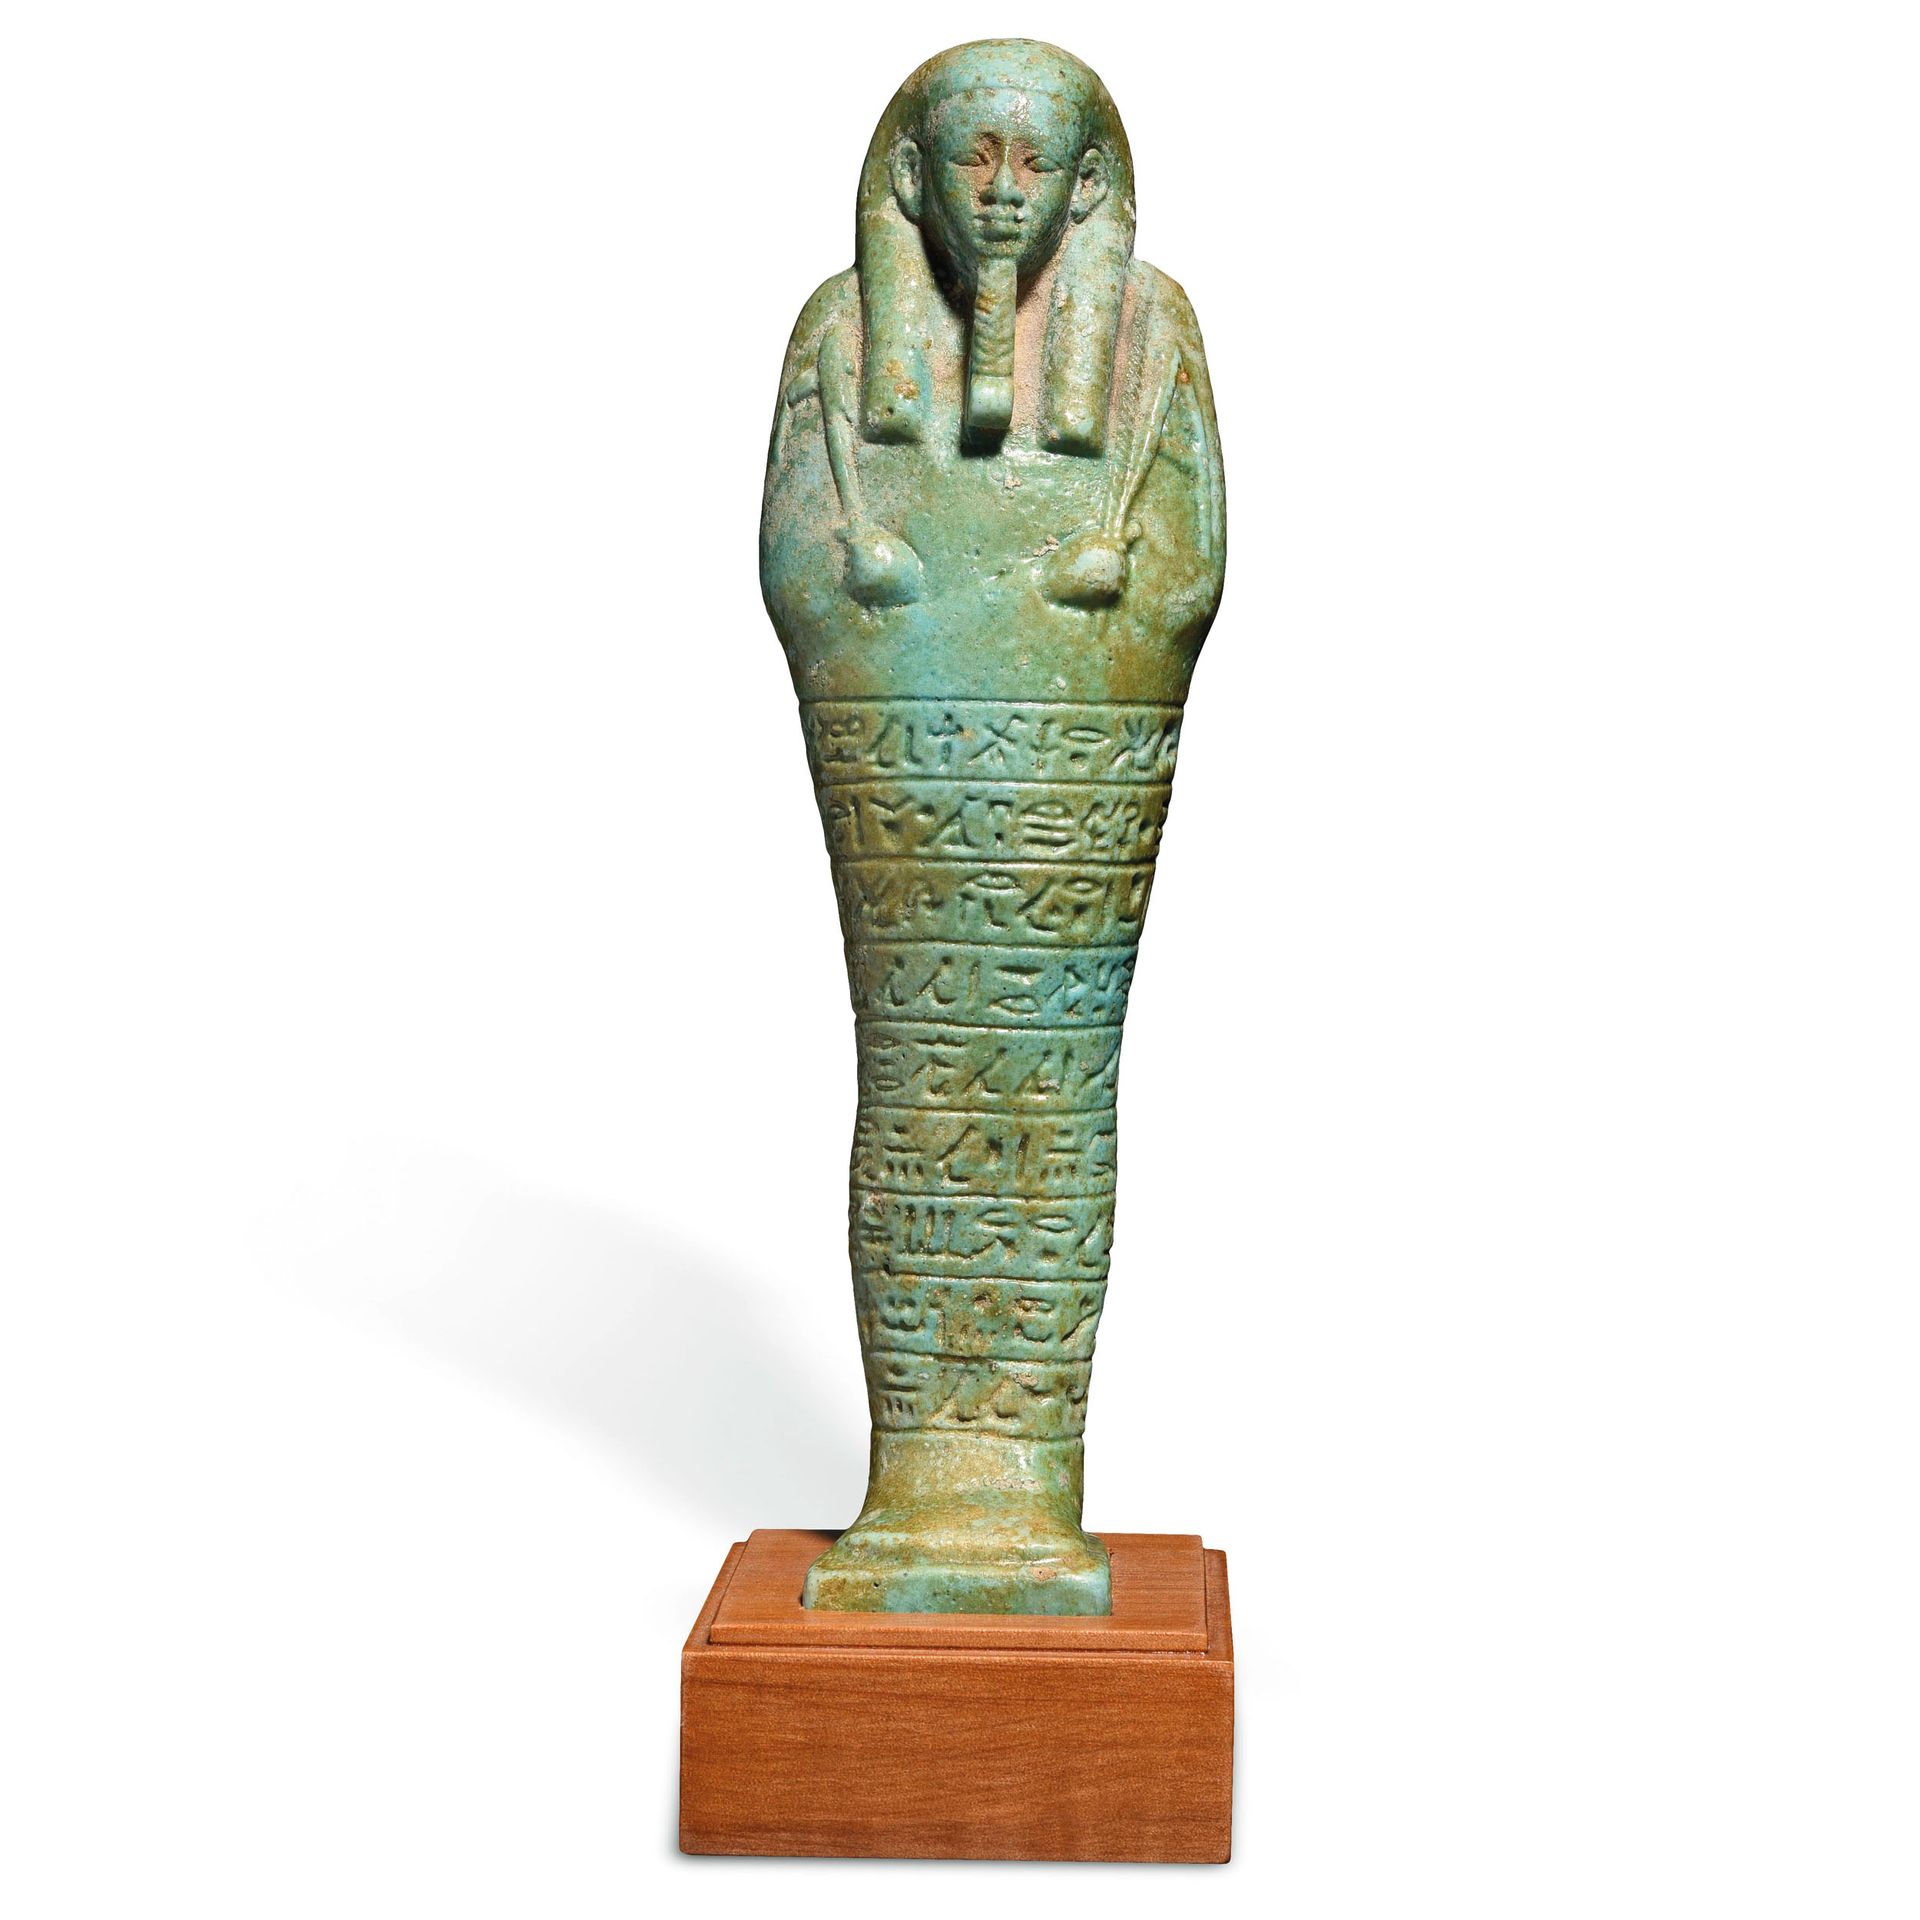 Null OUSHABTI AU NOM DE PSAMMÉTIQUE

Egypte, XXVIe dynastie, 664-525 av. J.-C. 
&hellip;